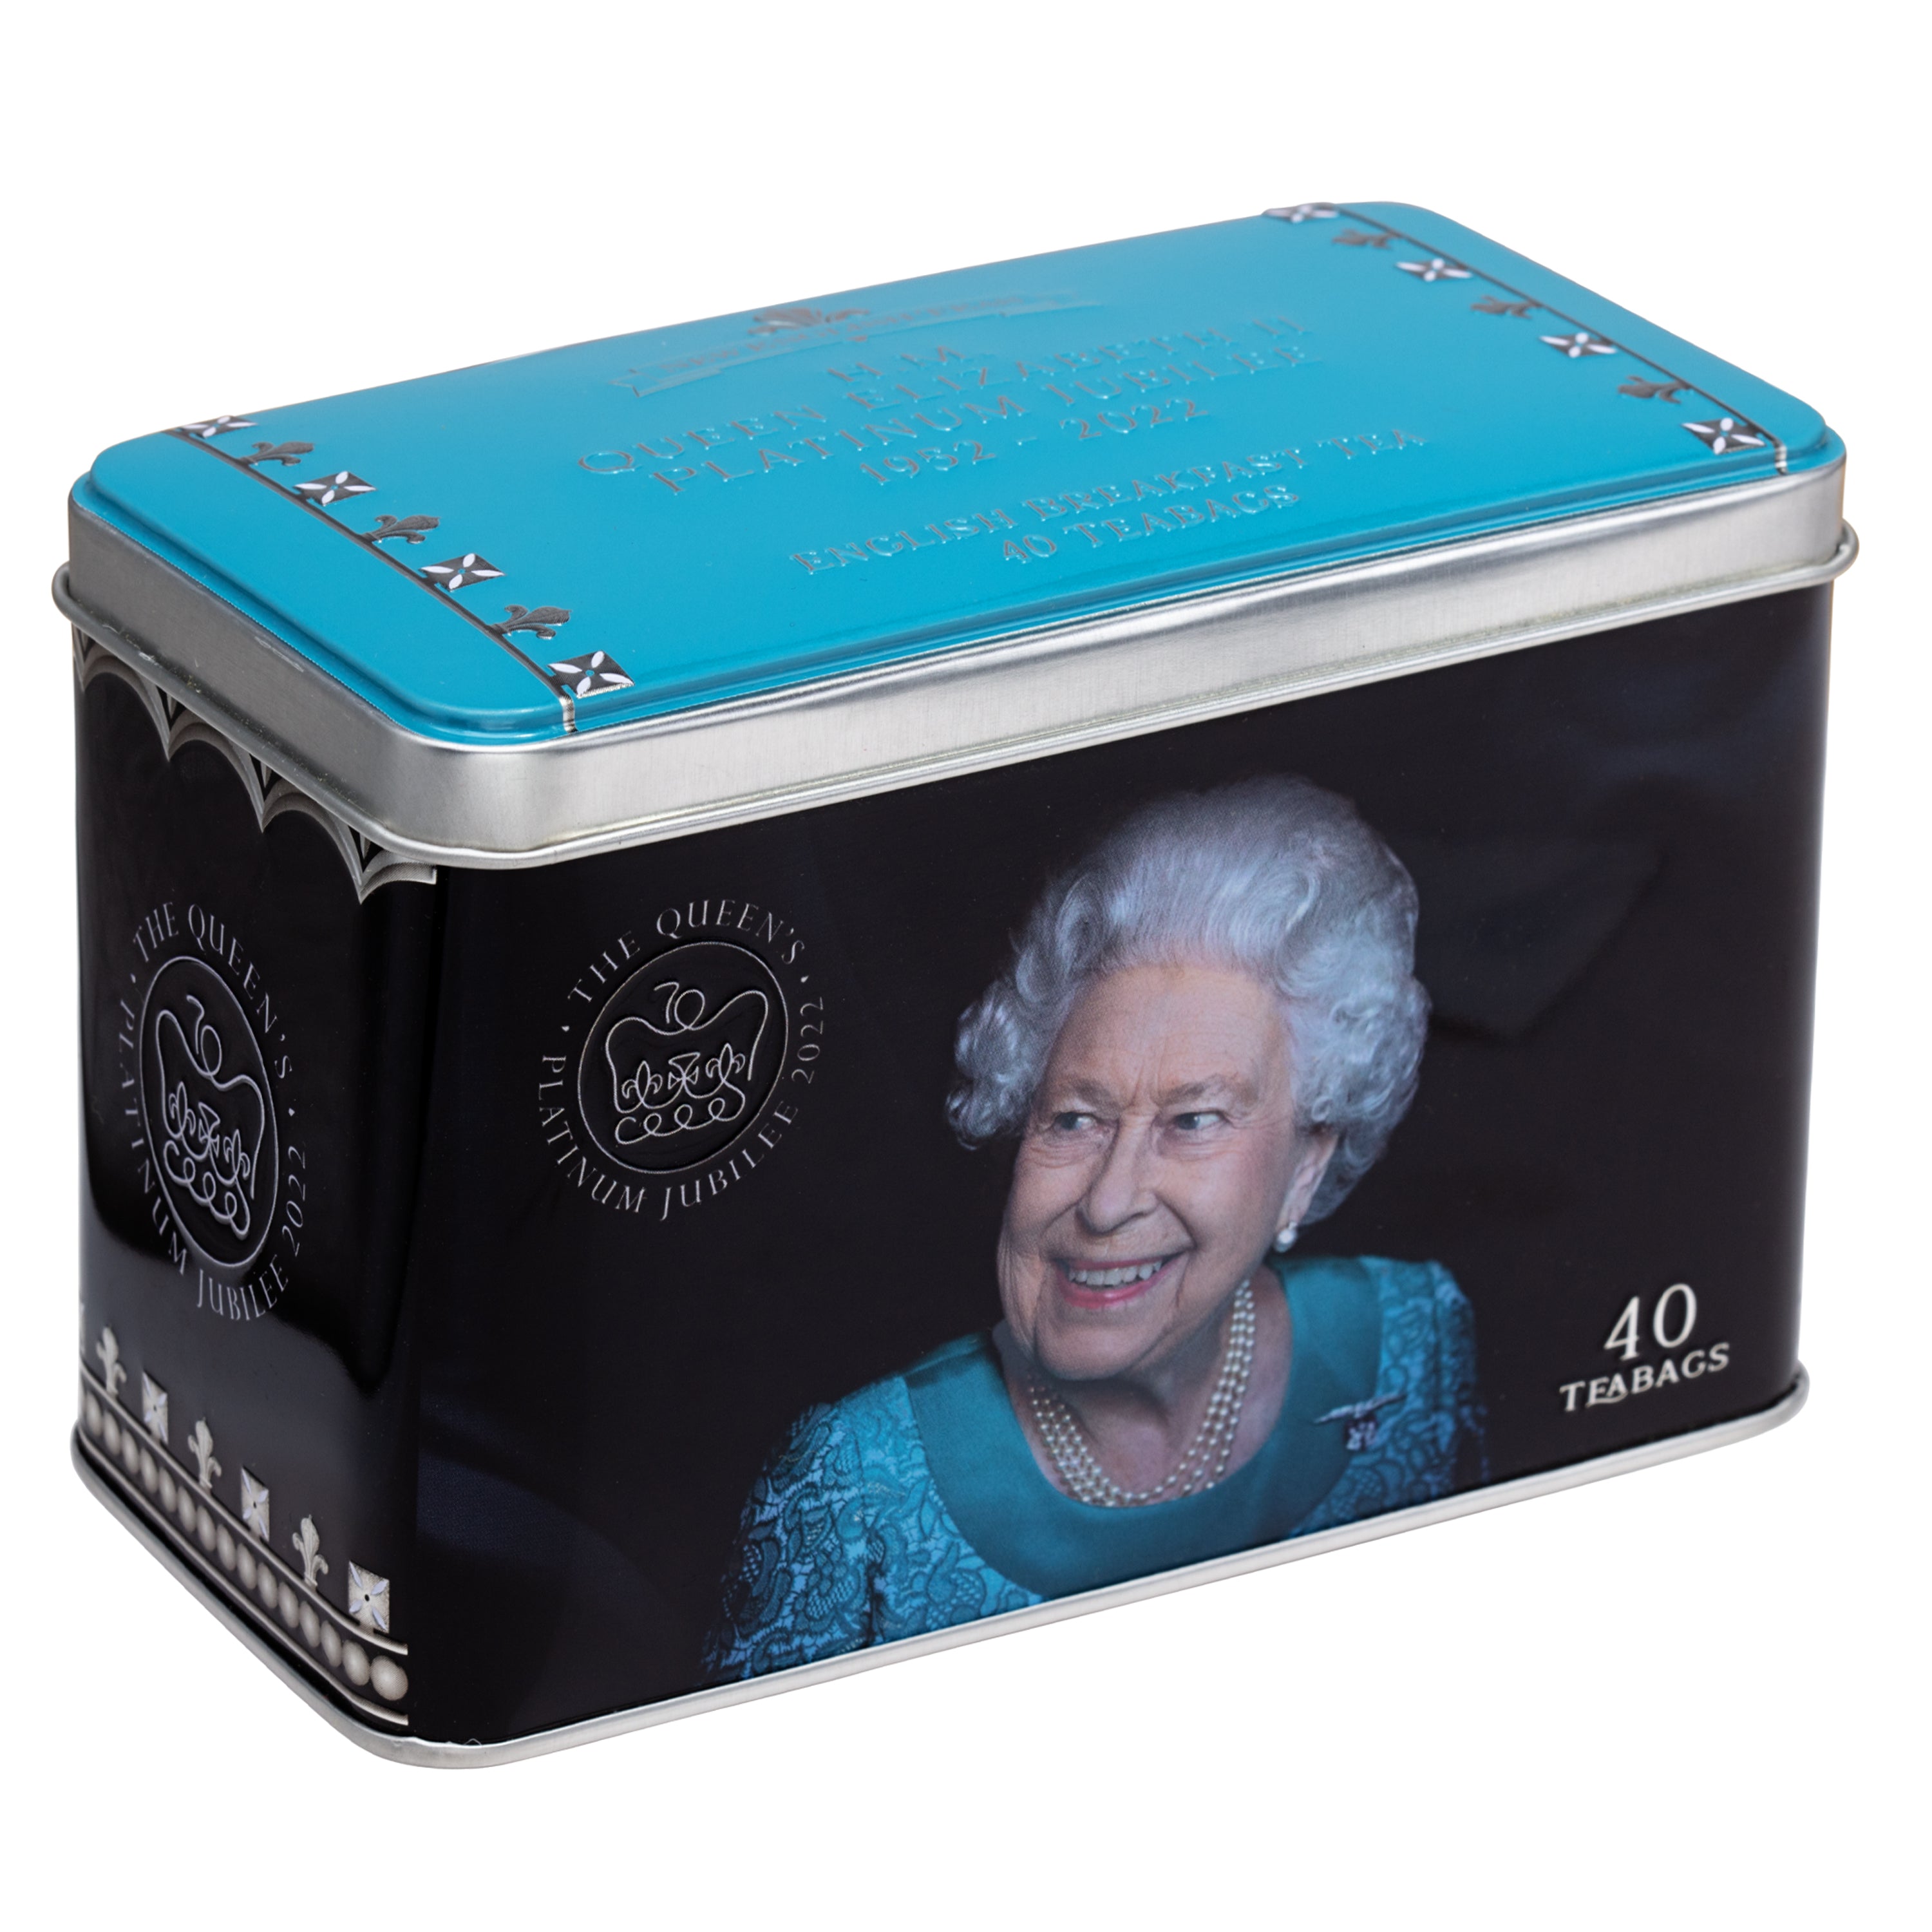 Queen Elizabeth II Platinum Jubilee 2022 Tea Tin with 40 English Breakfast Teabags Black Tea New English Teas 